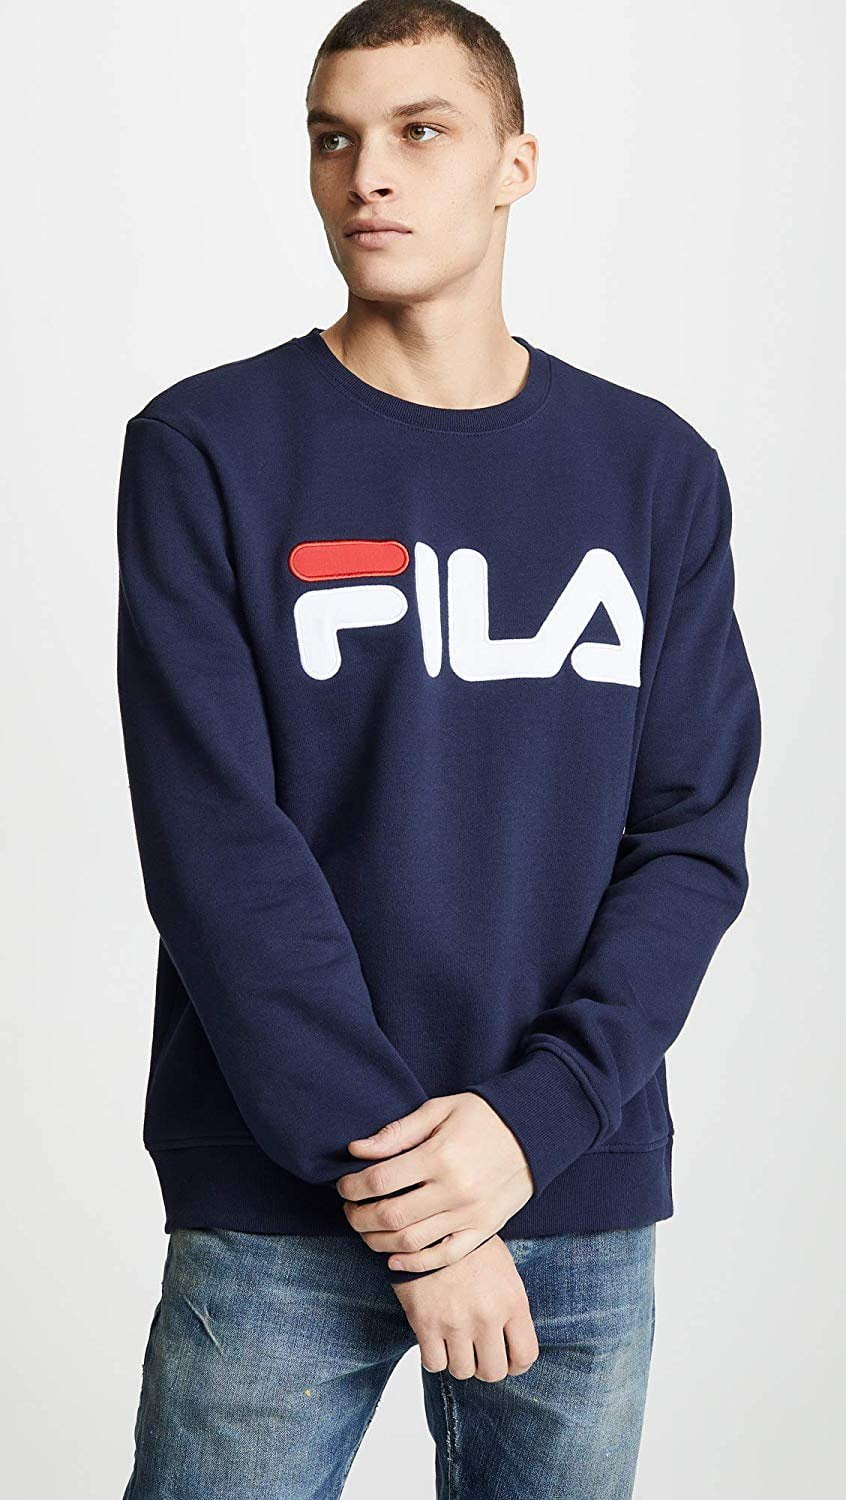 Fila Men's Regola Sweatshirt, Navy, Blue, Graphic, XX-Large - Walmart.com